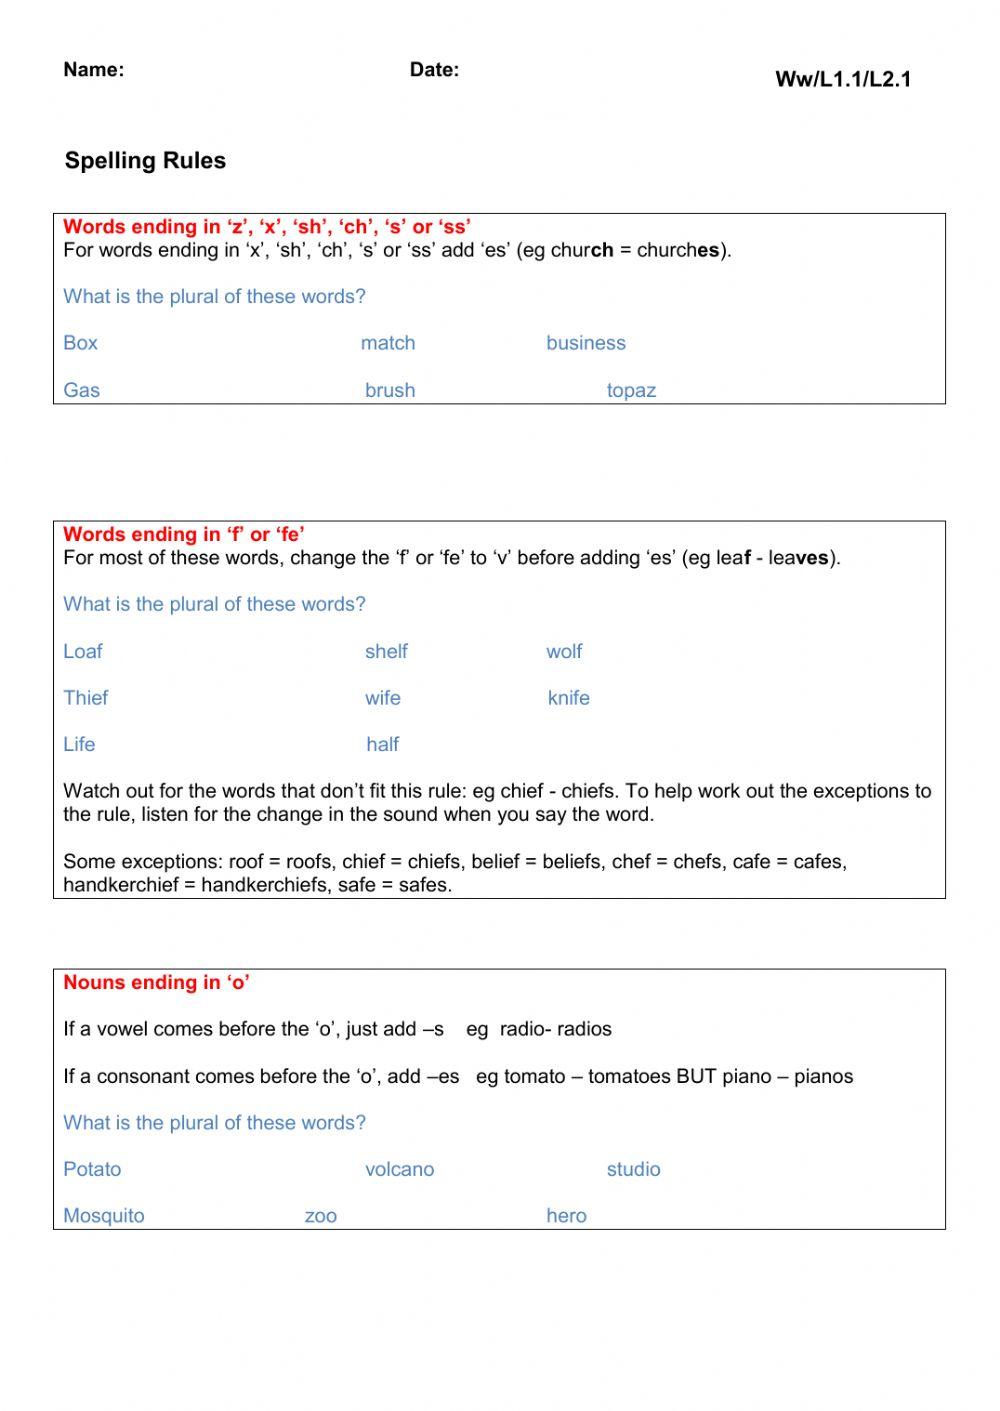 Plural Spelling Rules